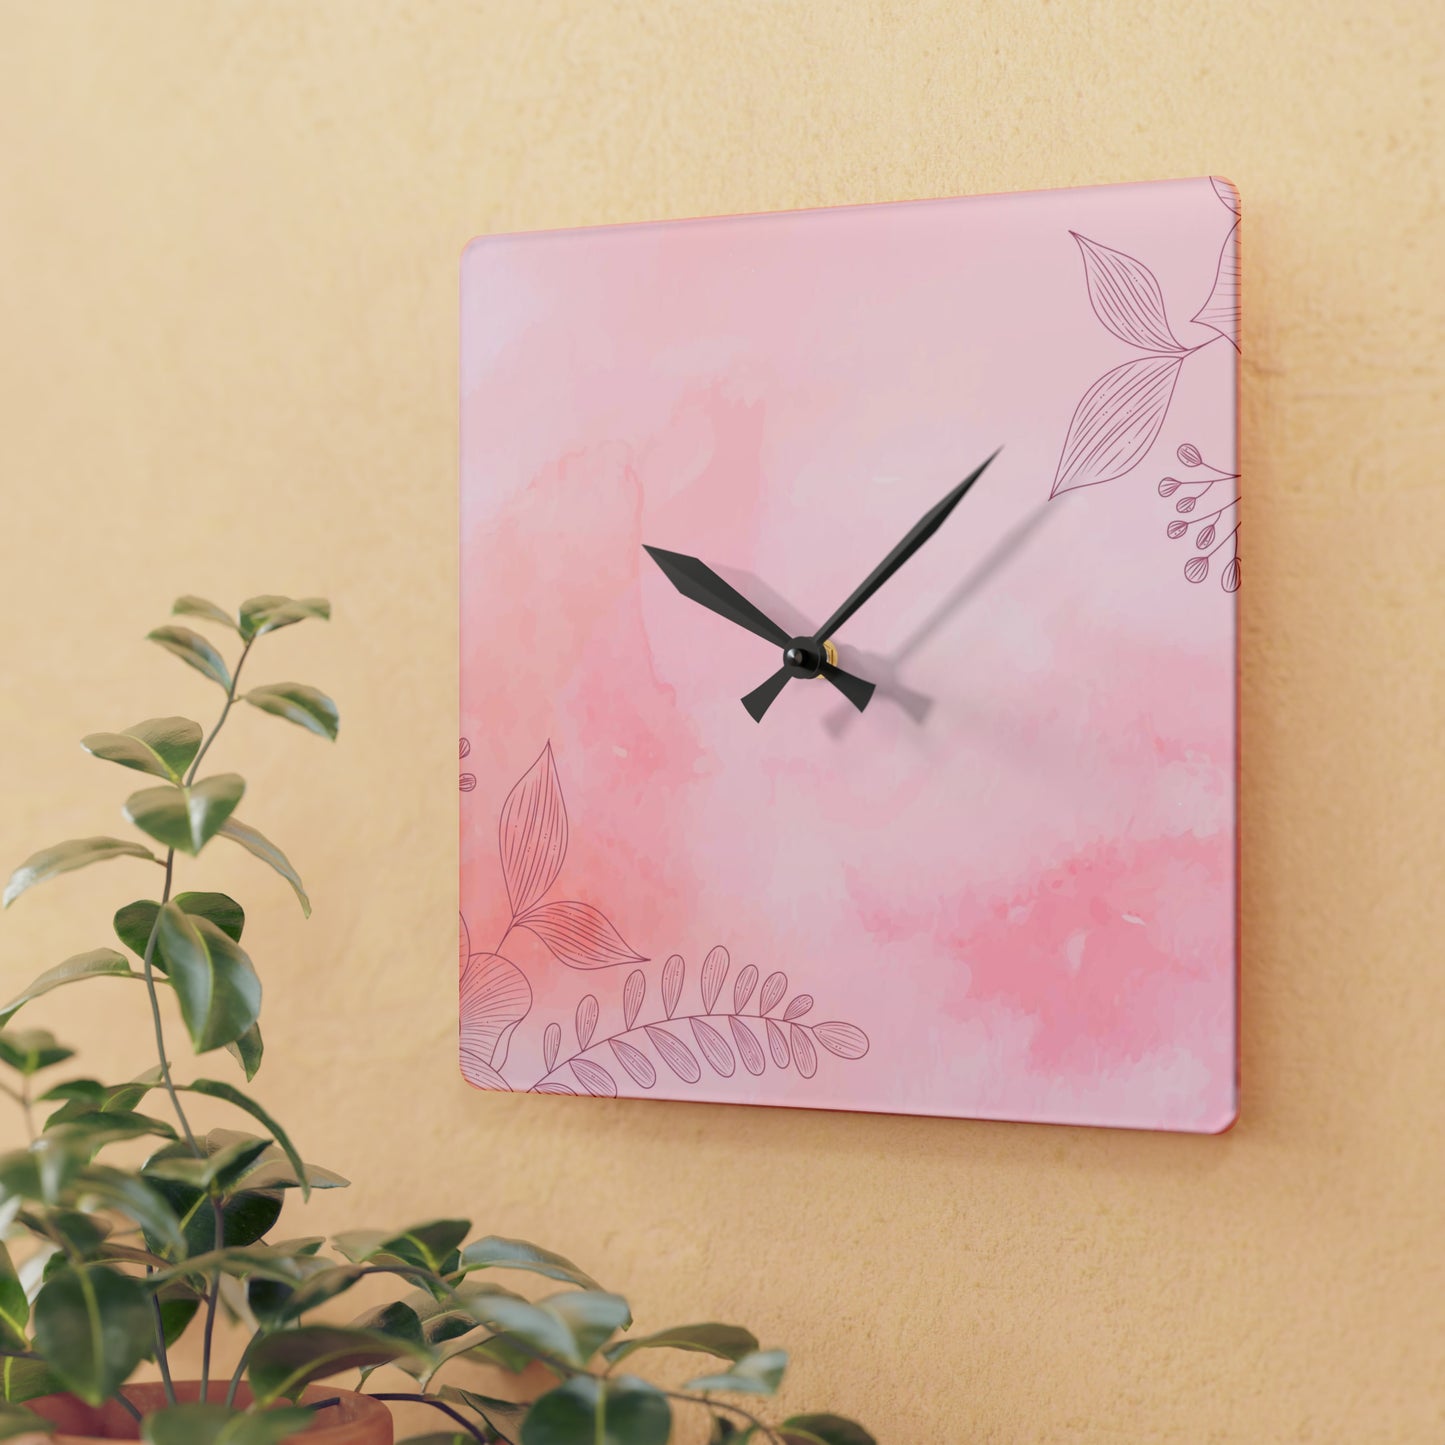 Gamme Pinky d'Olivia | Horloge murale en acrylique